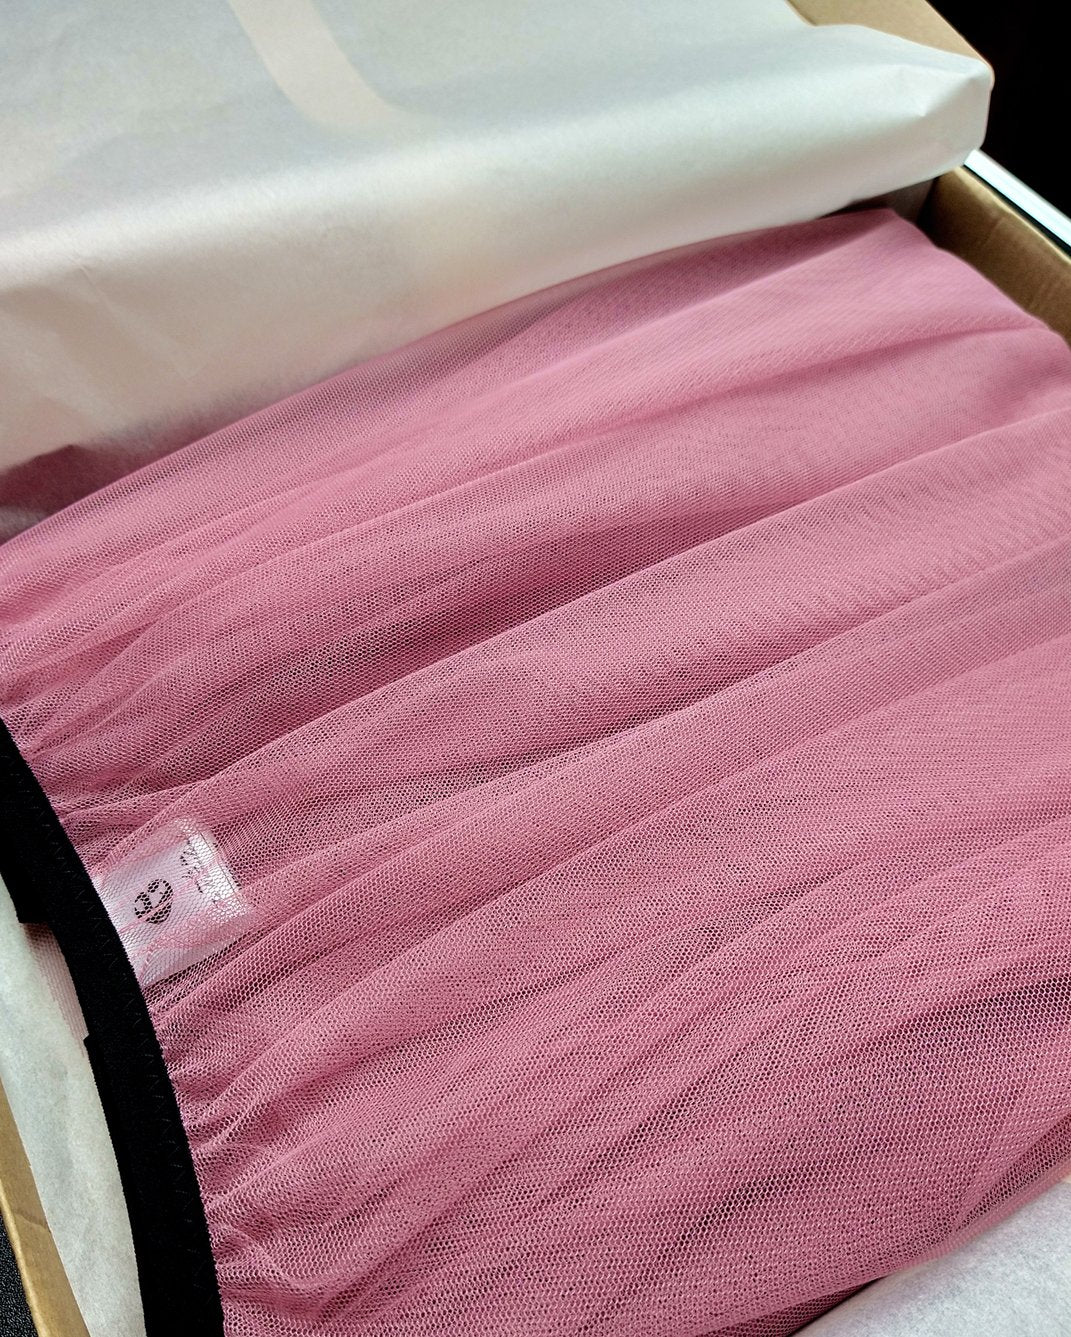 Old rose ballet tulle skirt for dancers and ballerinas